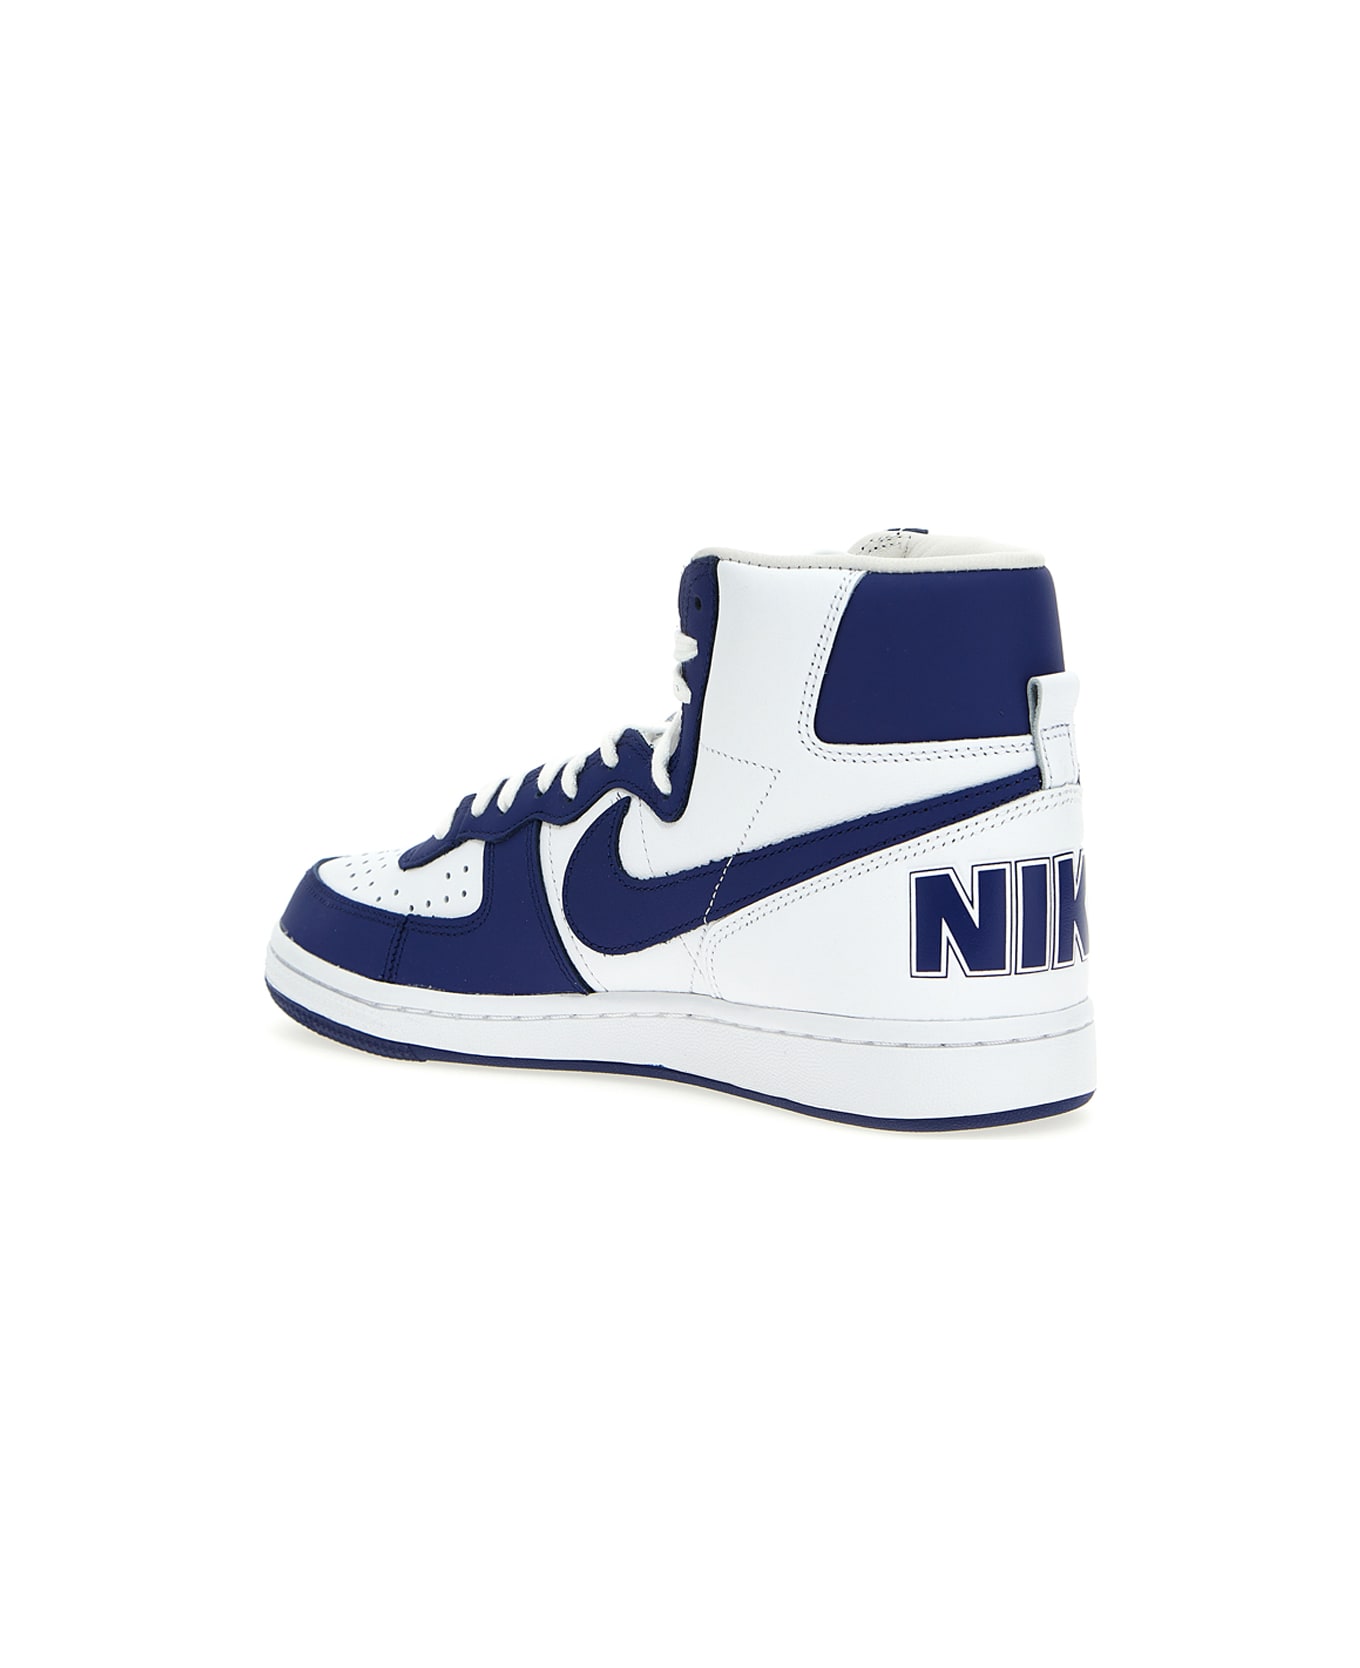 Comme Des Garçons Homme Plus X woven Nike 'terminator' Sneaker - Blu